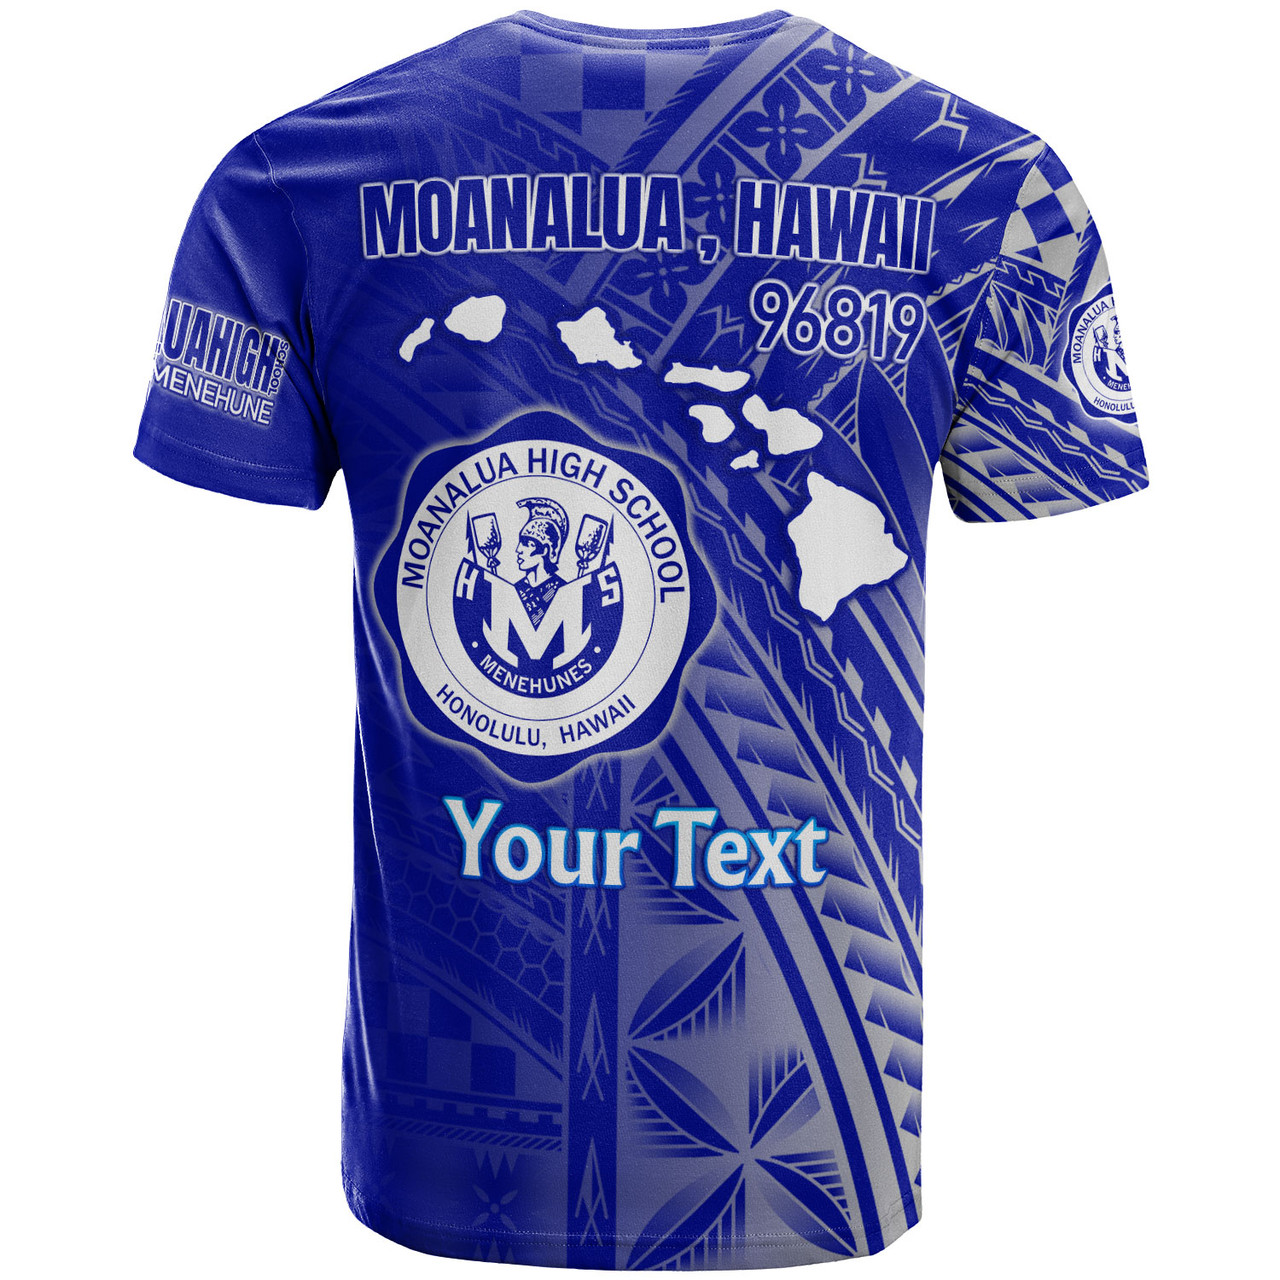 Hawaii Moanalua High School T-Shirt - Custom Moanalua NÄ Menehune Hawaii Patterns